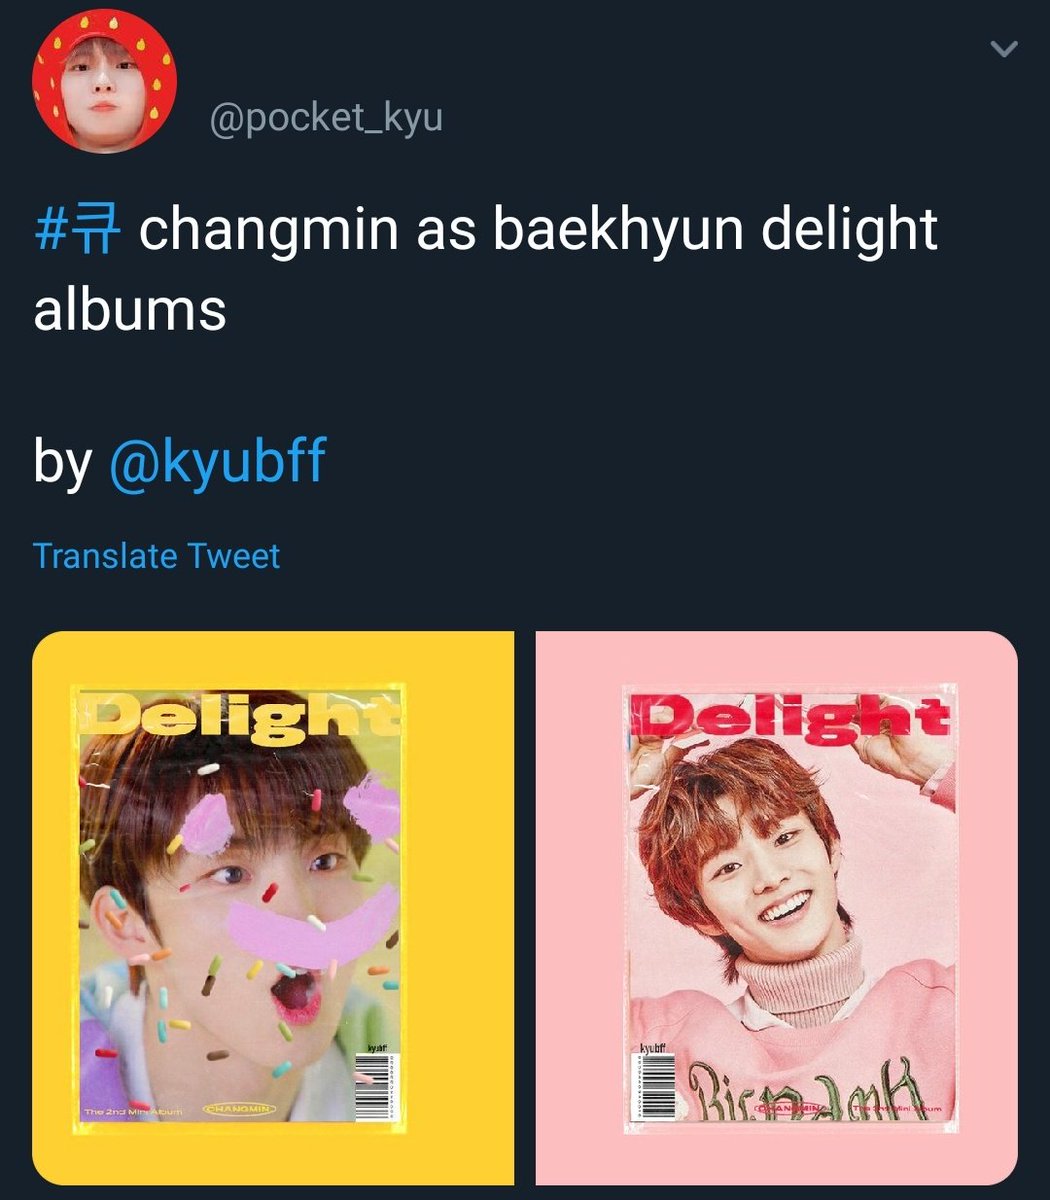 baekhyun the trend setter